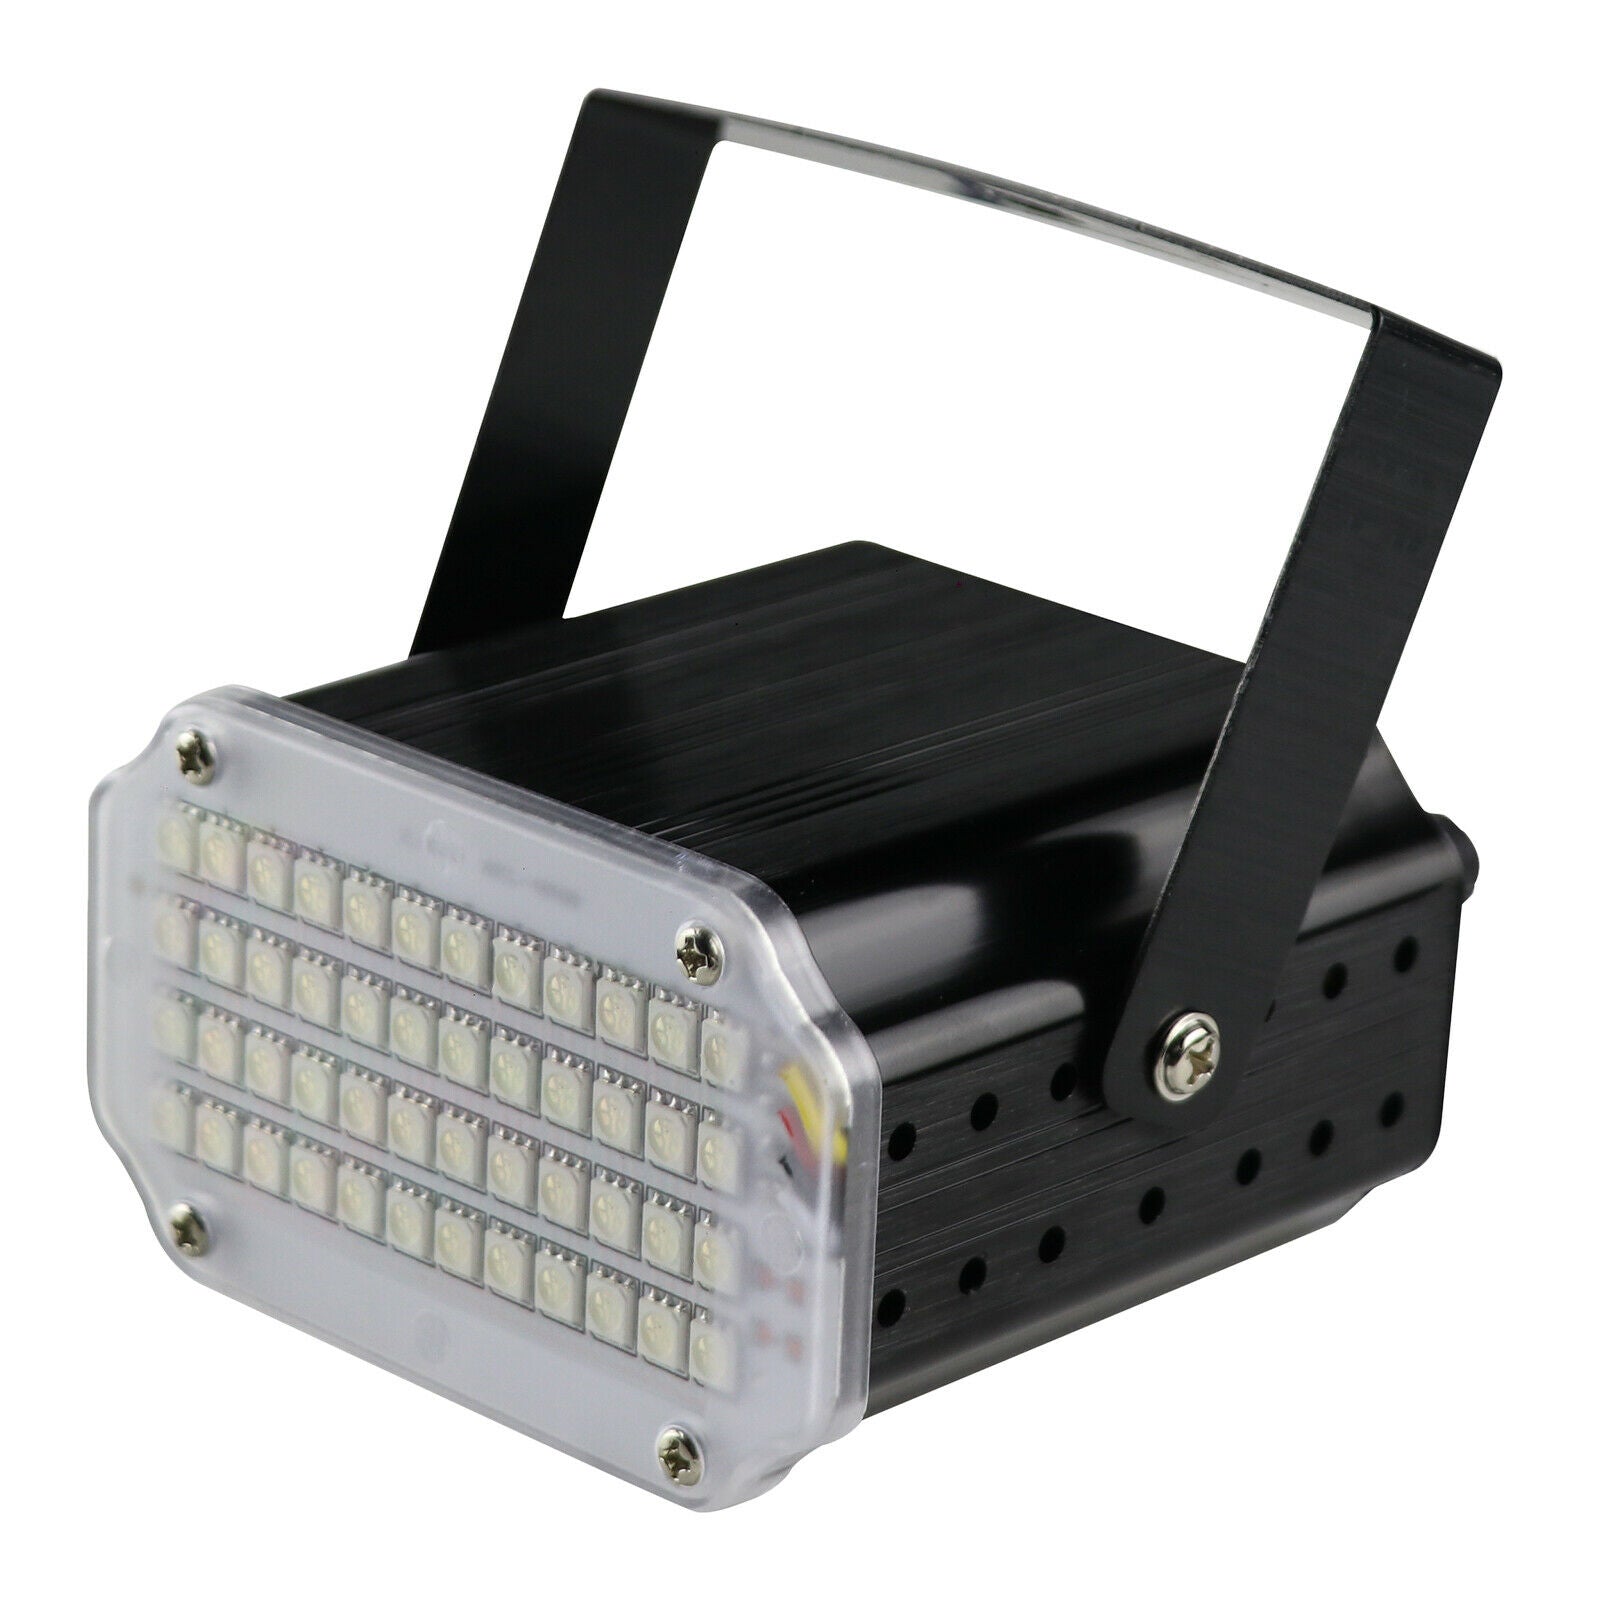 48 LED Strobe Light w/Remote DJ Flash Stage Lighting Remote Control (US)